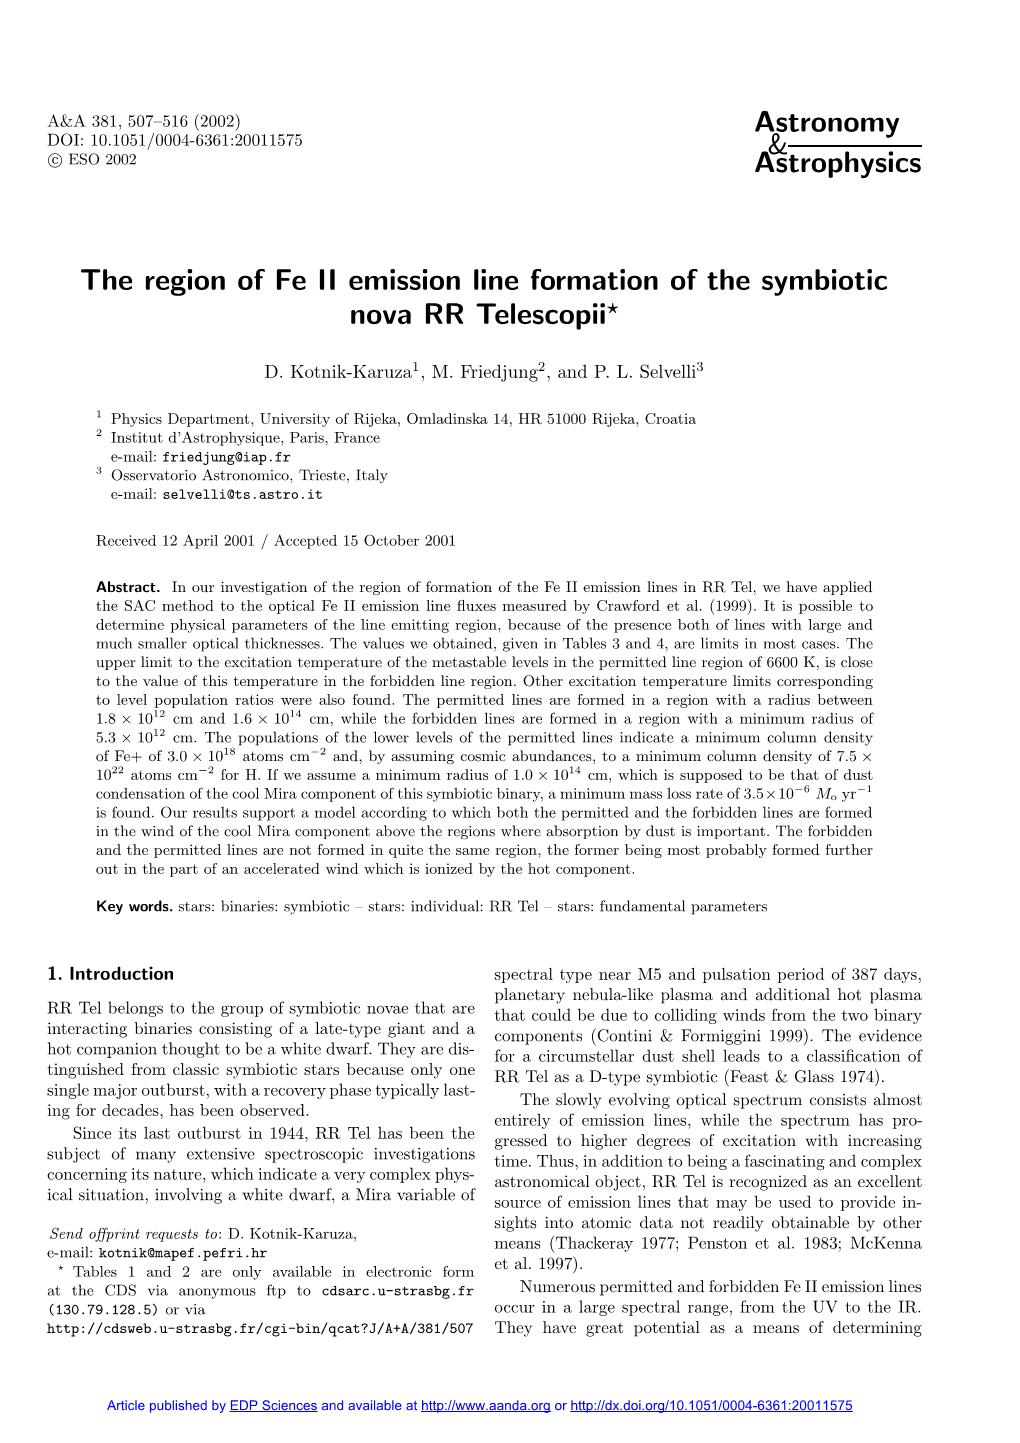 The Region of Fe II Emission Line Formation of the Symbiotic Nova RR Telescopii?